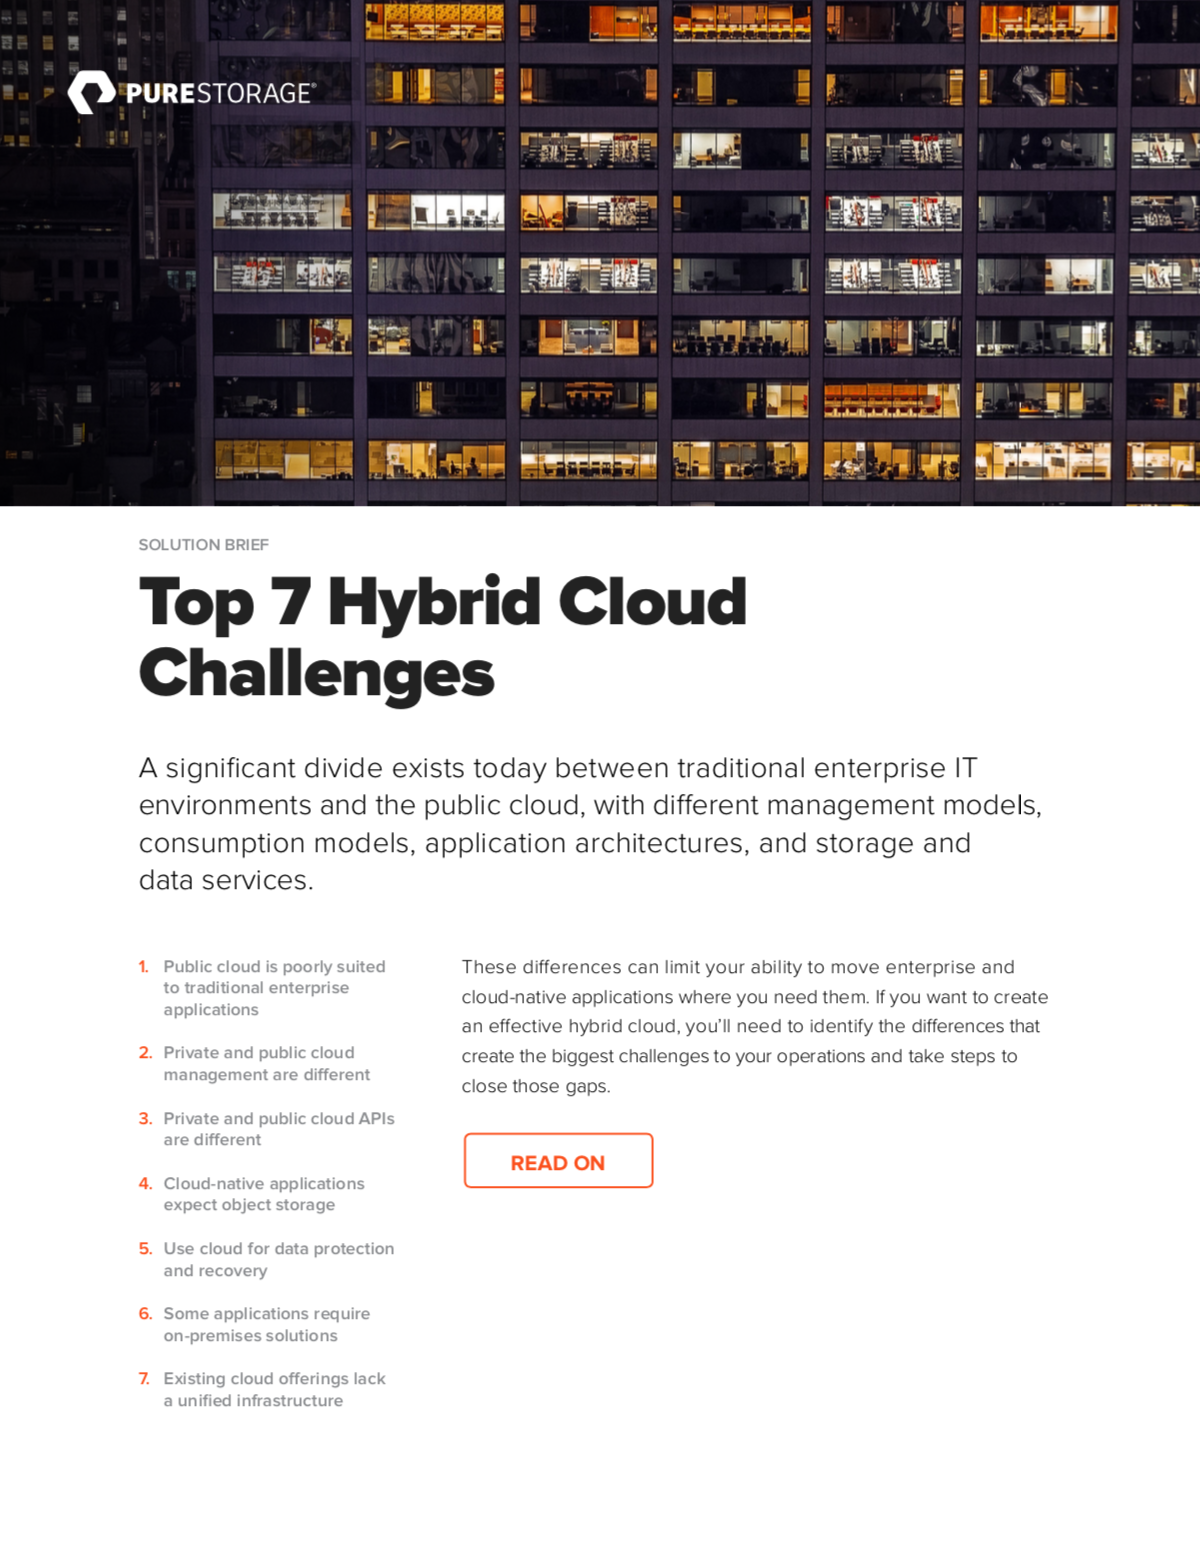 Top 7 Hybrid Cloud Challenges